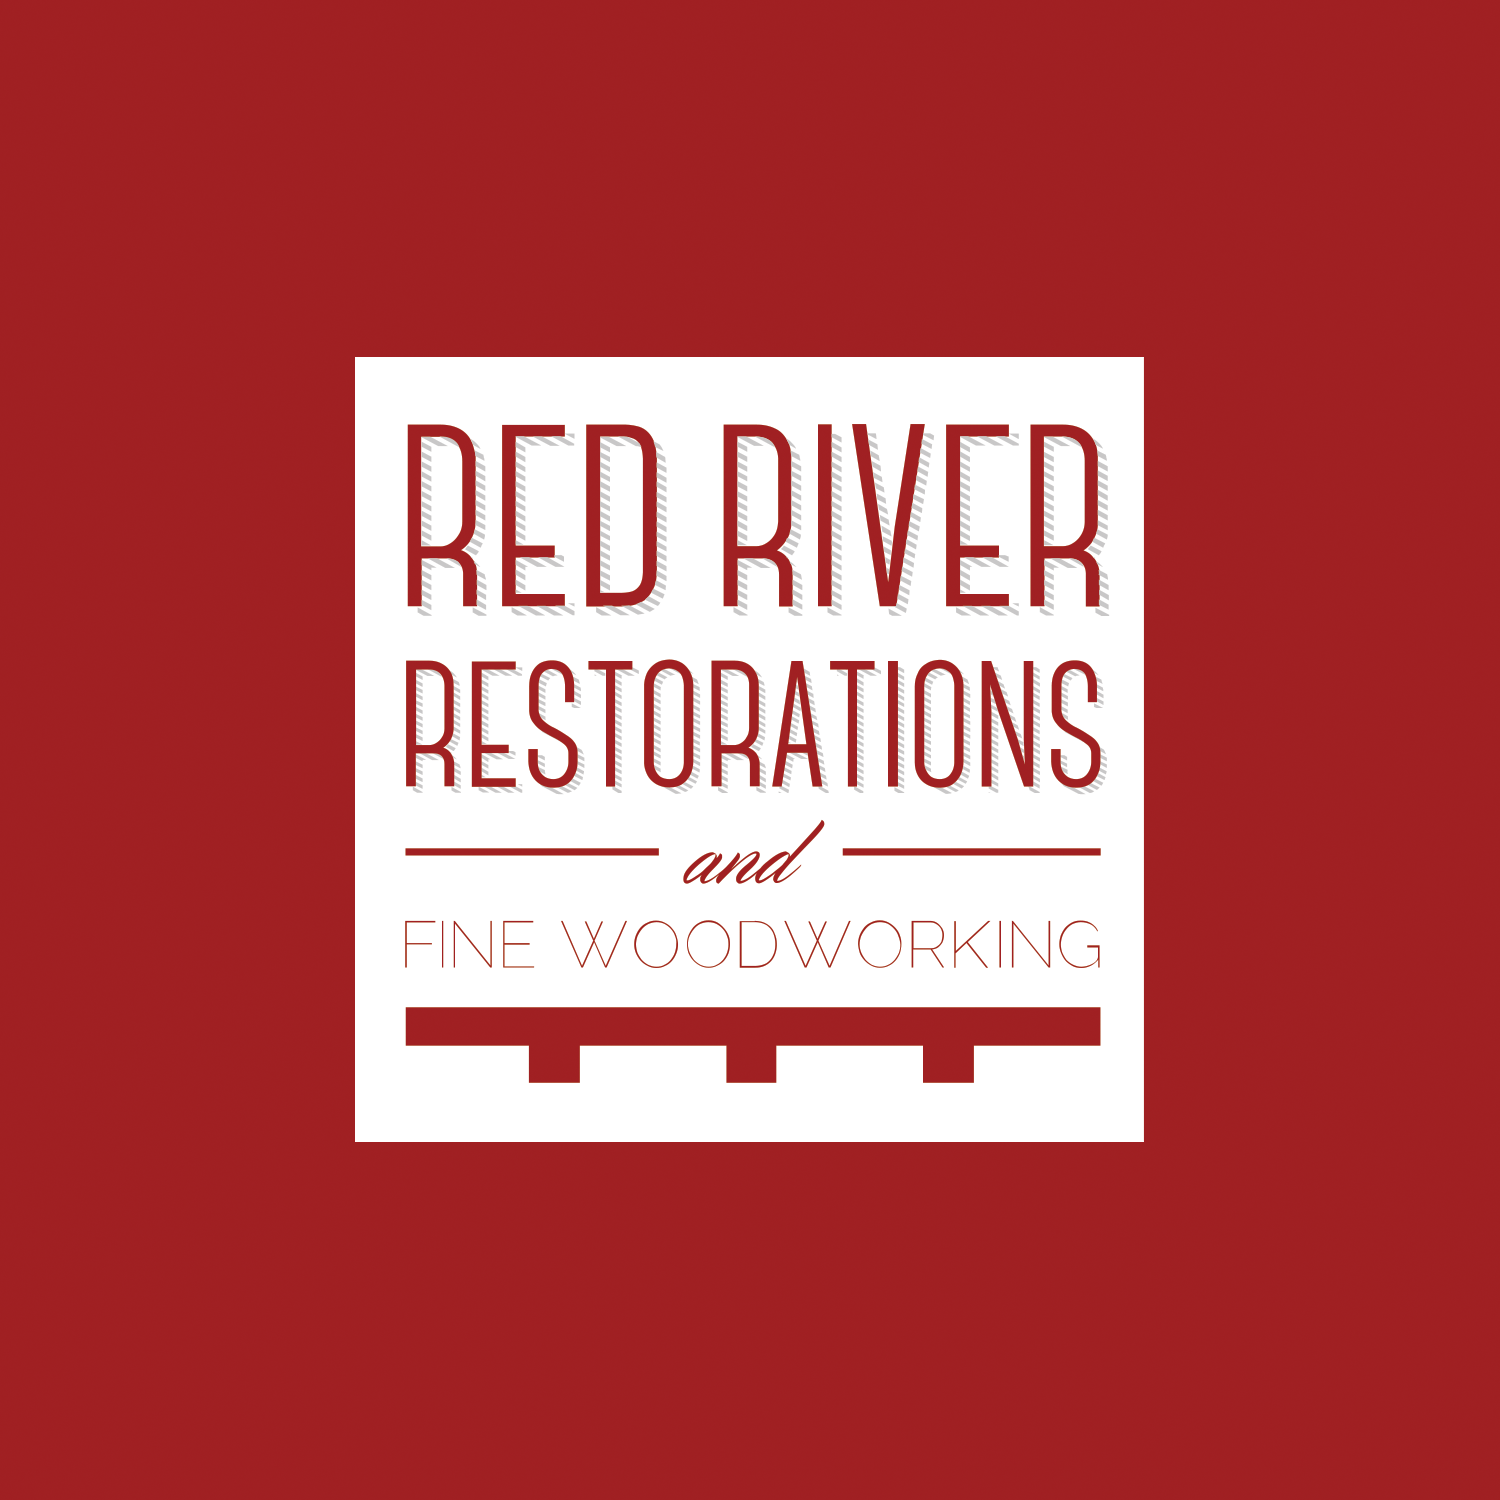 Red River Restorations